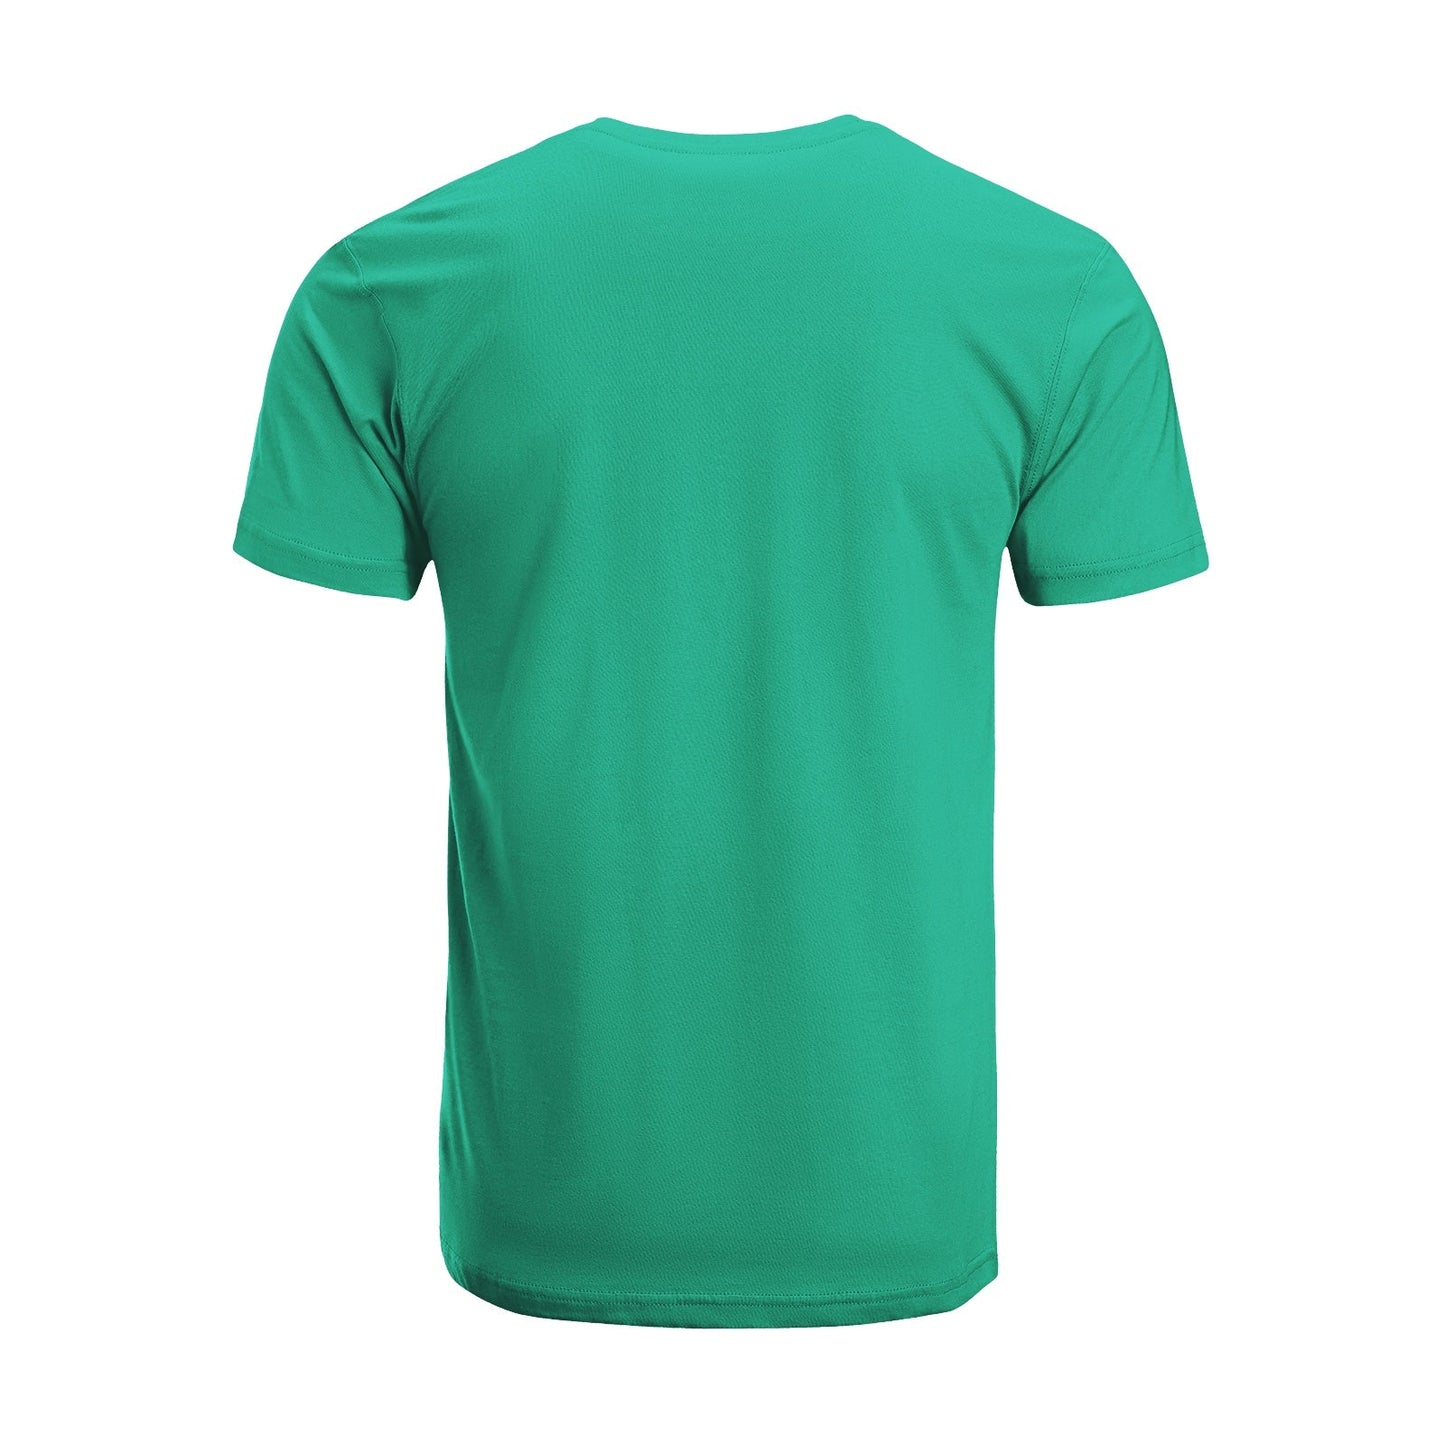 Unisex Short Sleeve Crew Neck Cotton Jersey T-Shirt DOG 46